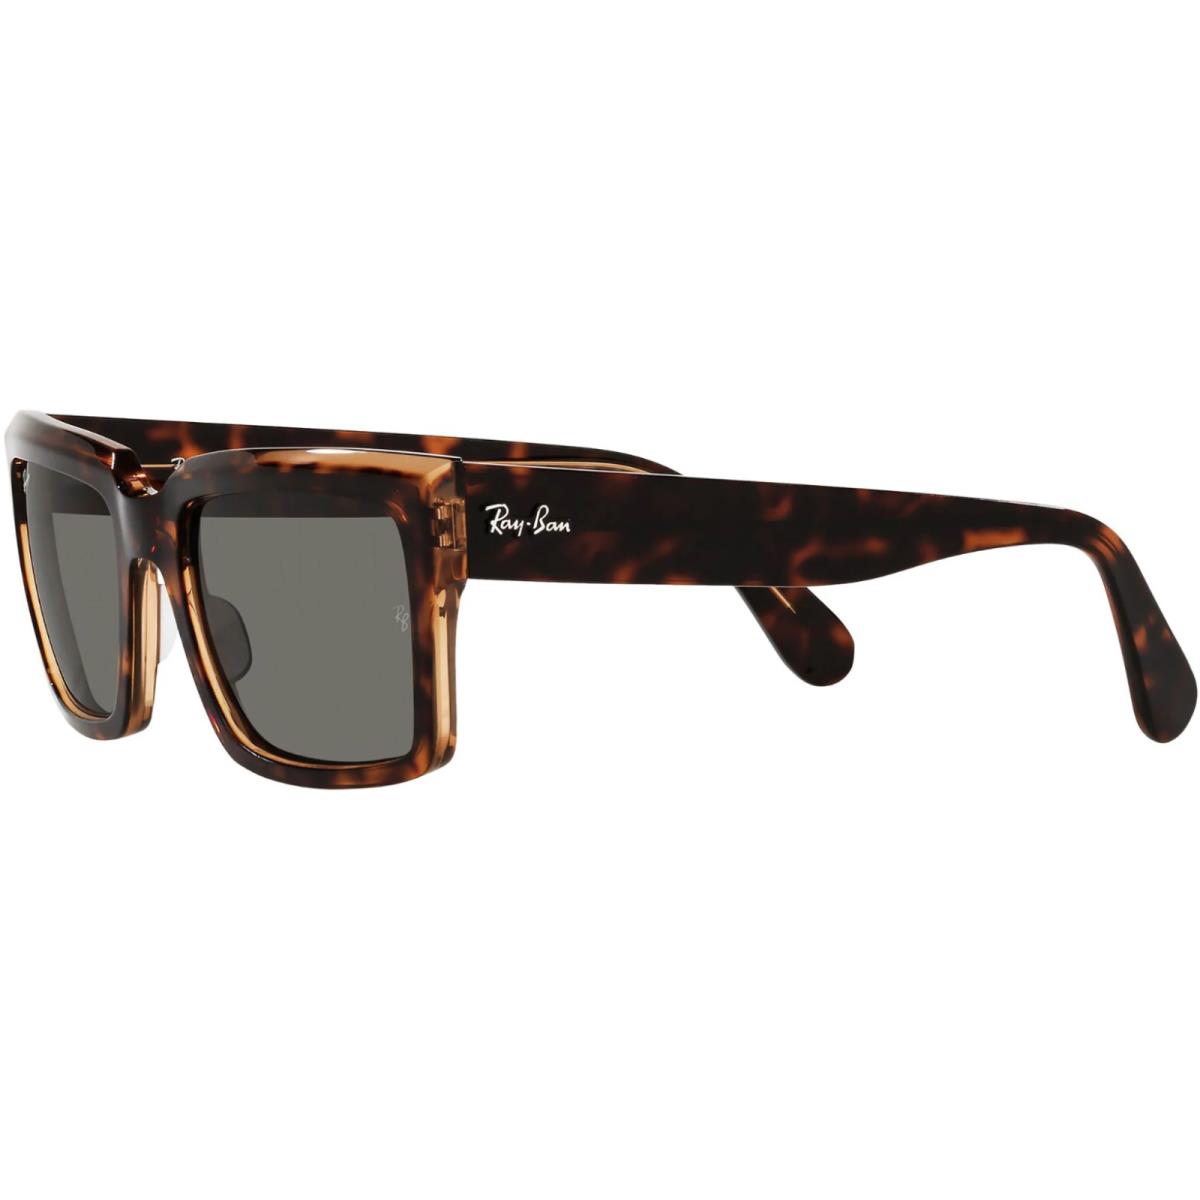 Ray-Ban sunglasses Havana - Frame: Brown, Lens: Gray